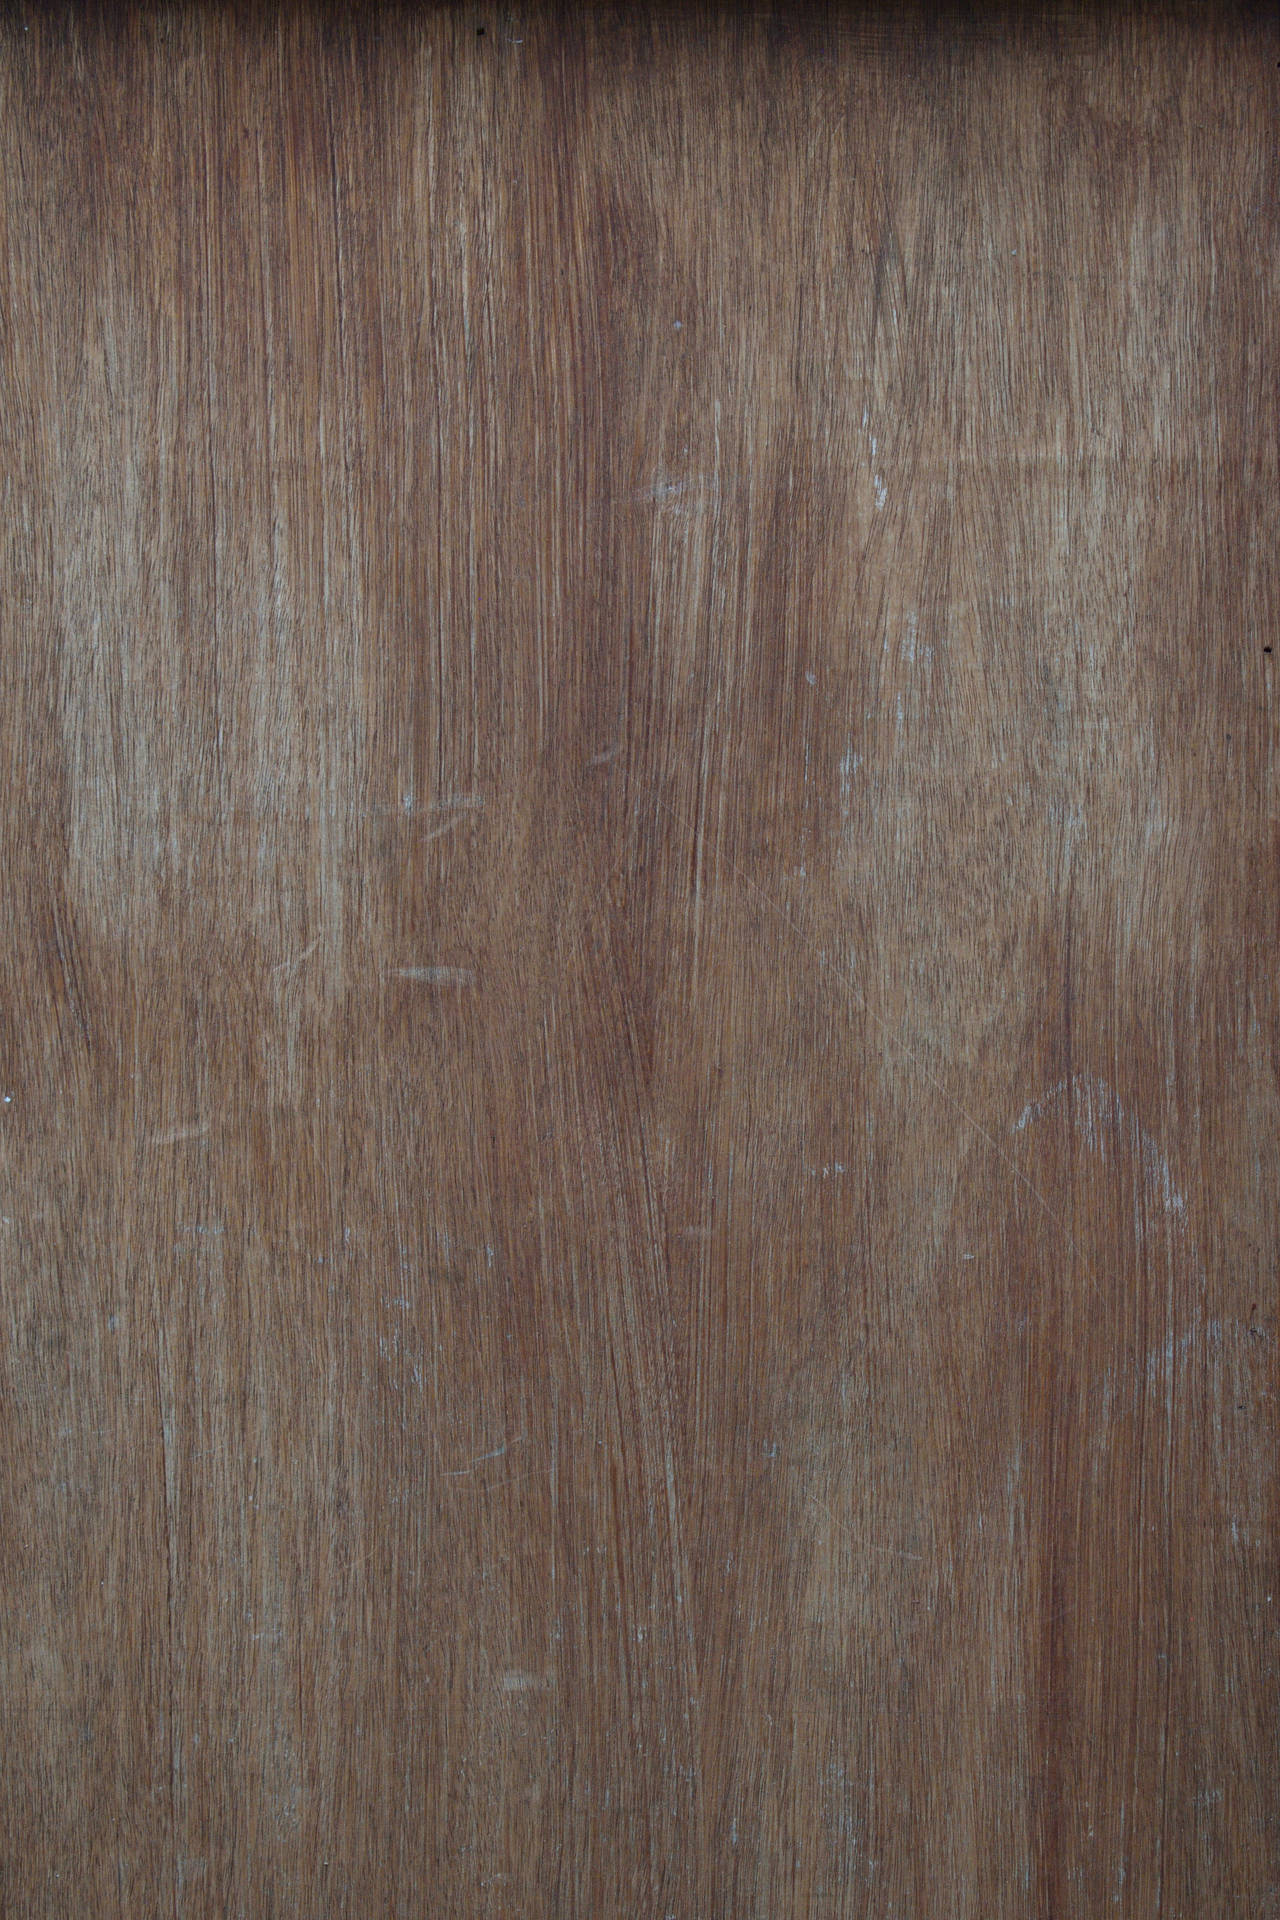 Brown Wood Hi Res Texture Wallpaper